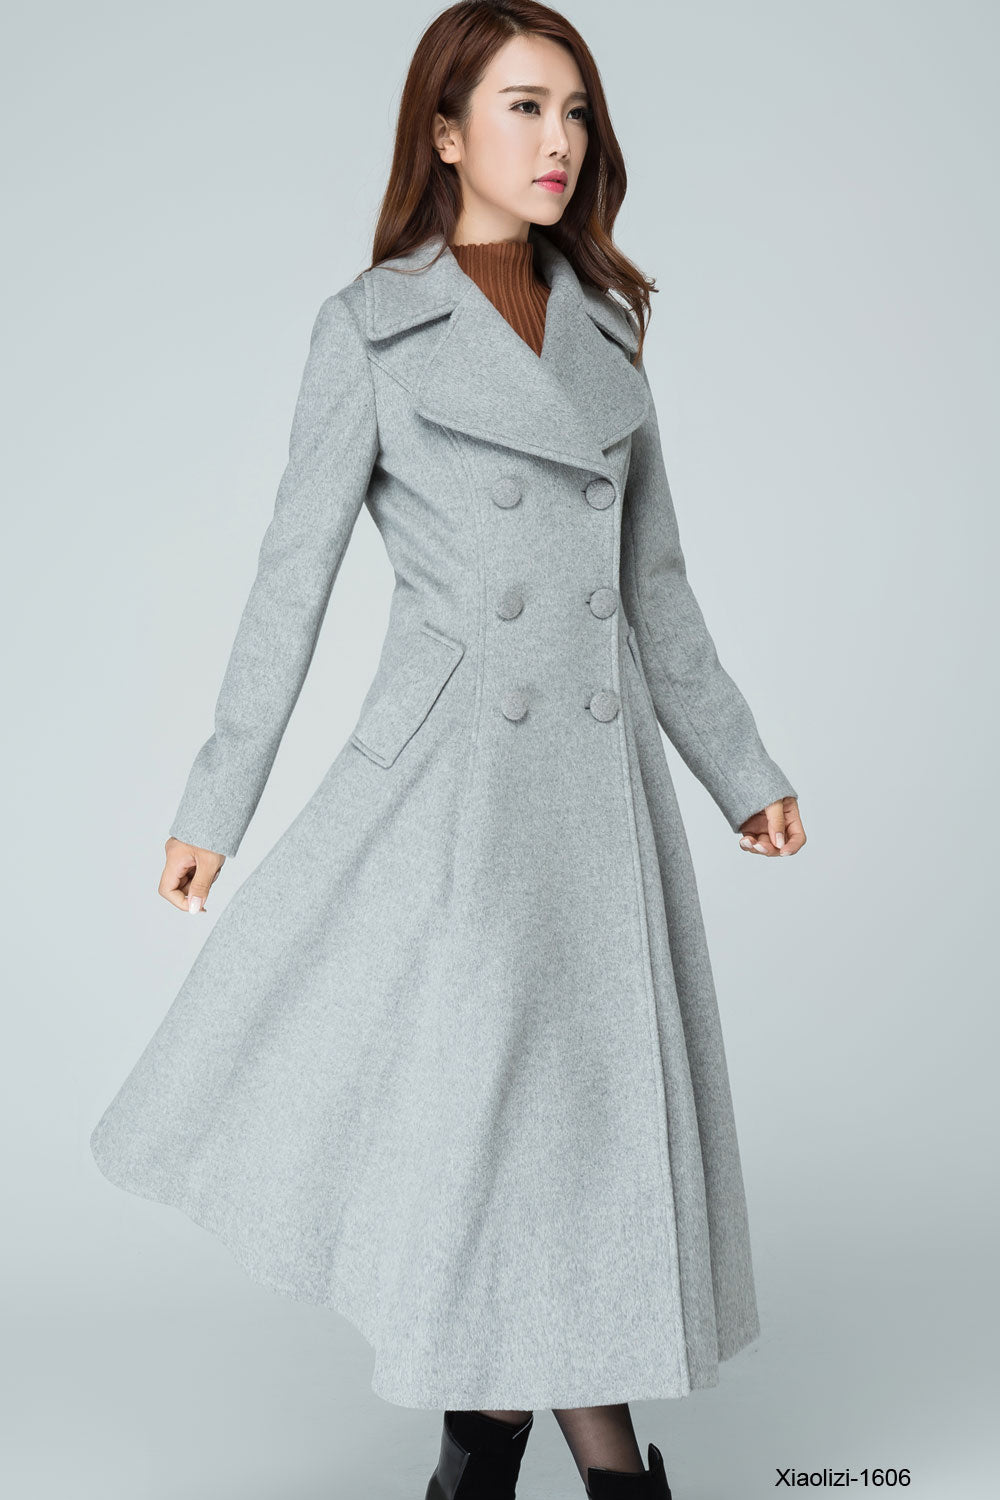 Double Breasted Wool Coat for Winter Women's Gray Wool